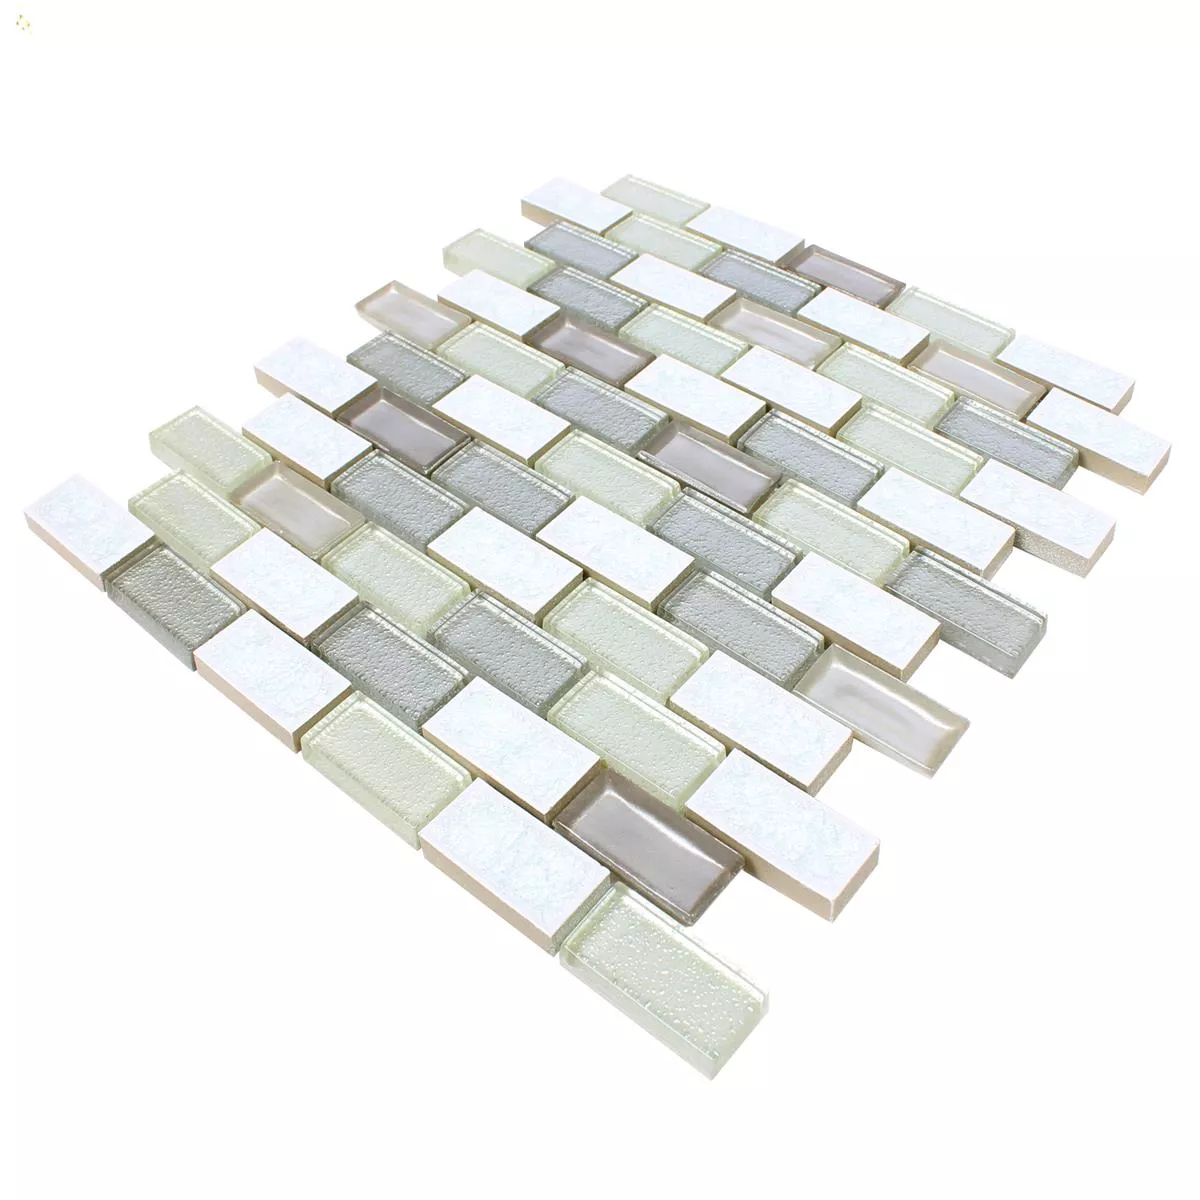 Mosaic Tiles Glass Ceramic Mirasol White